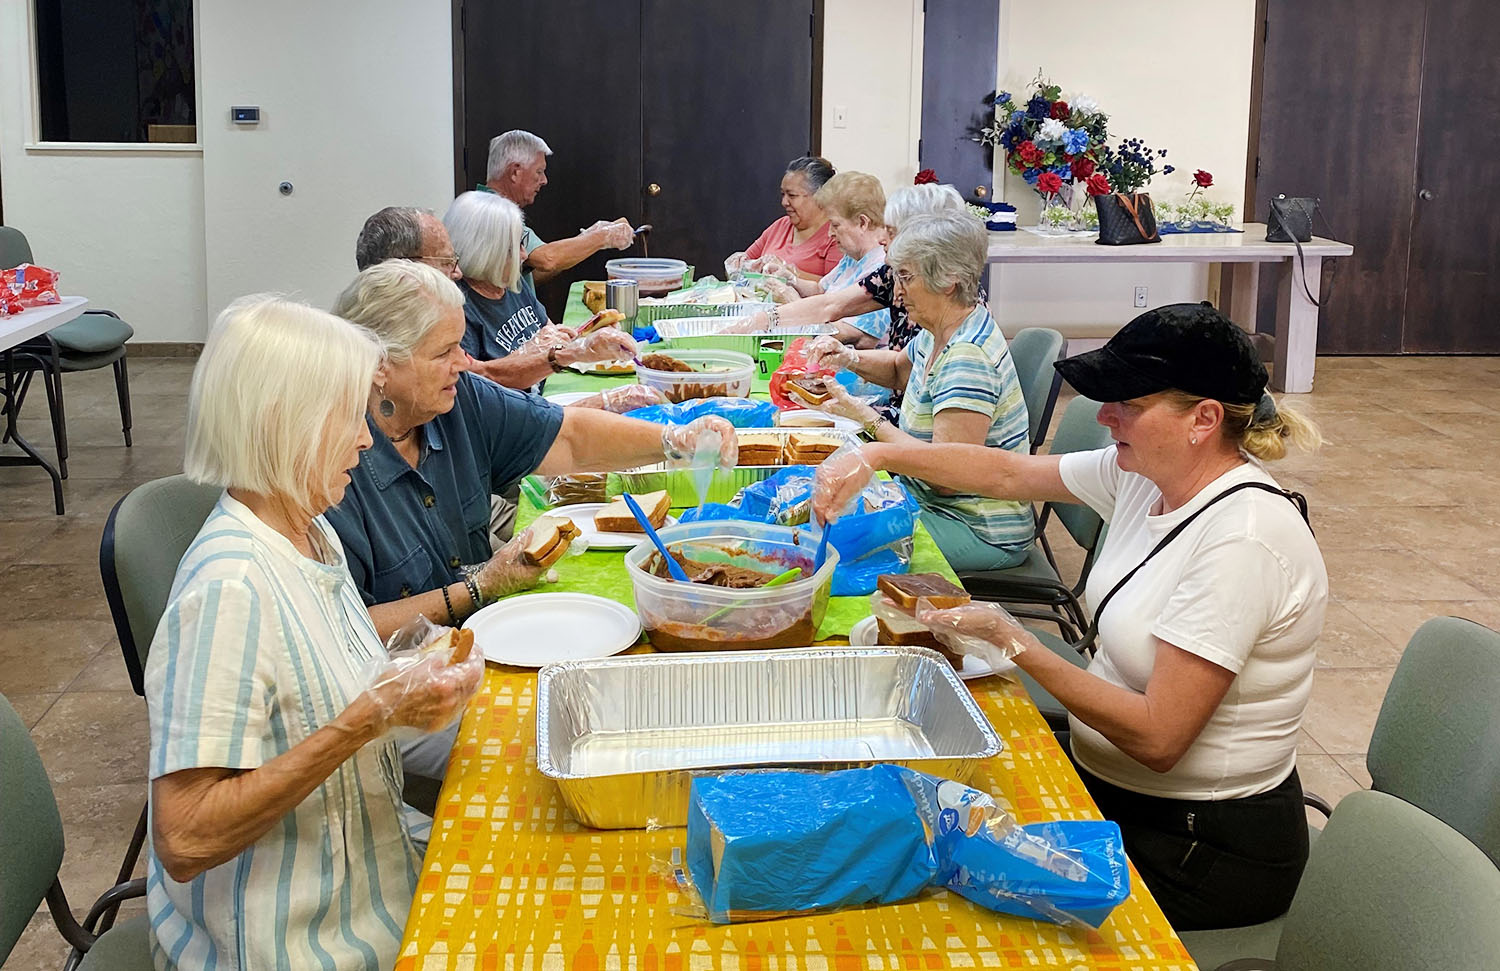 Group assembling meals for the homeless at Good Shepherd